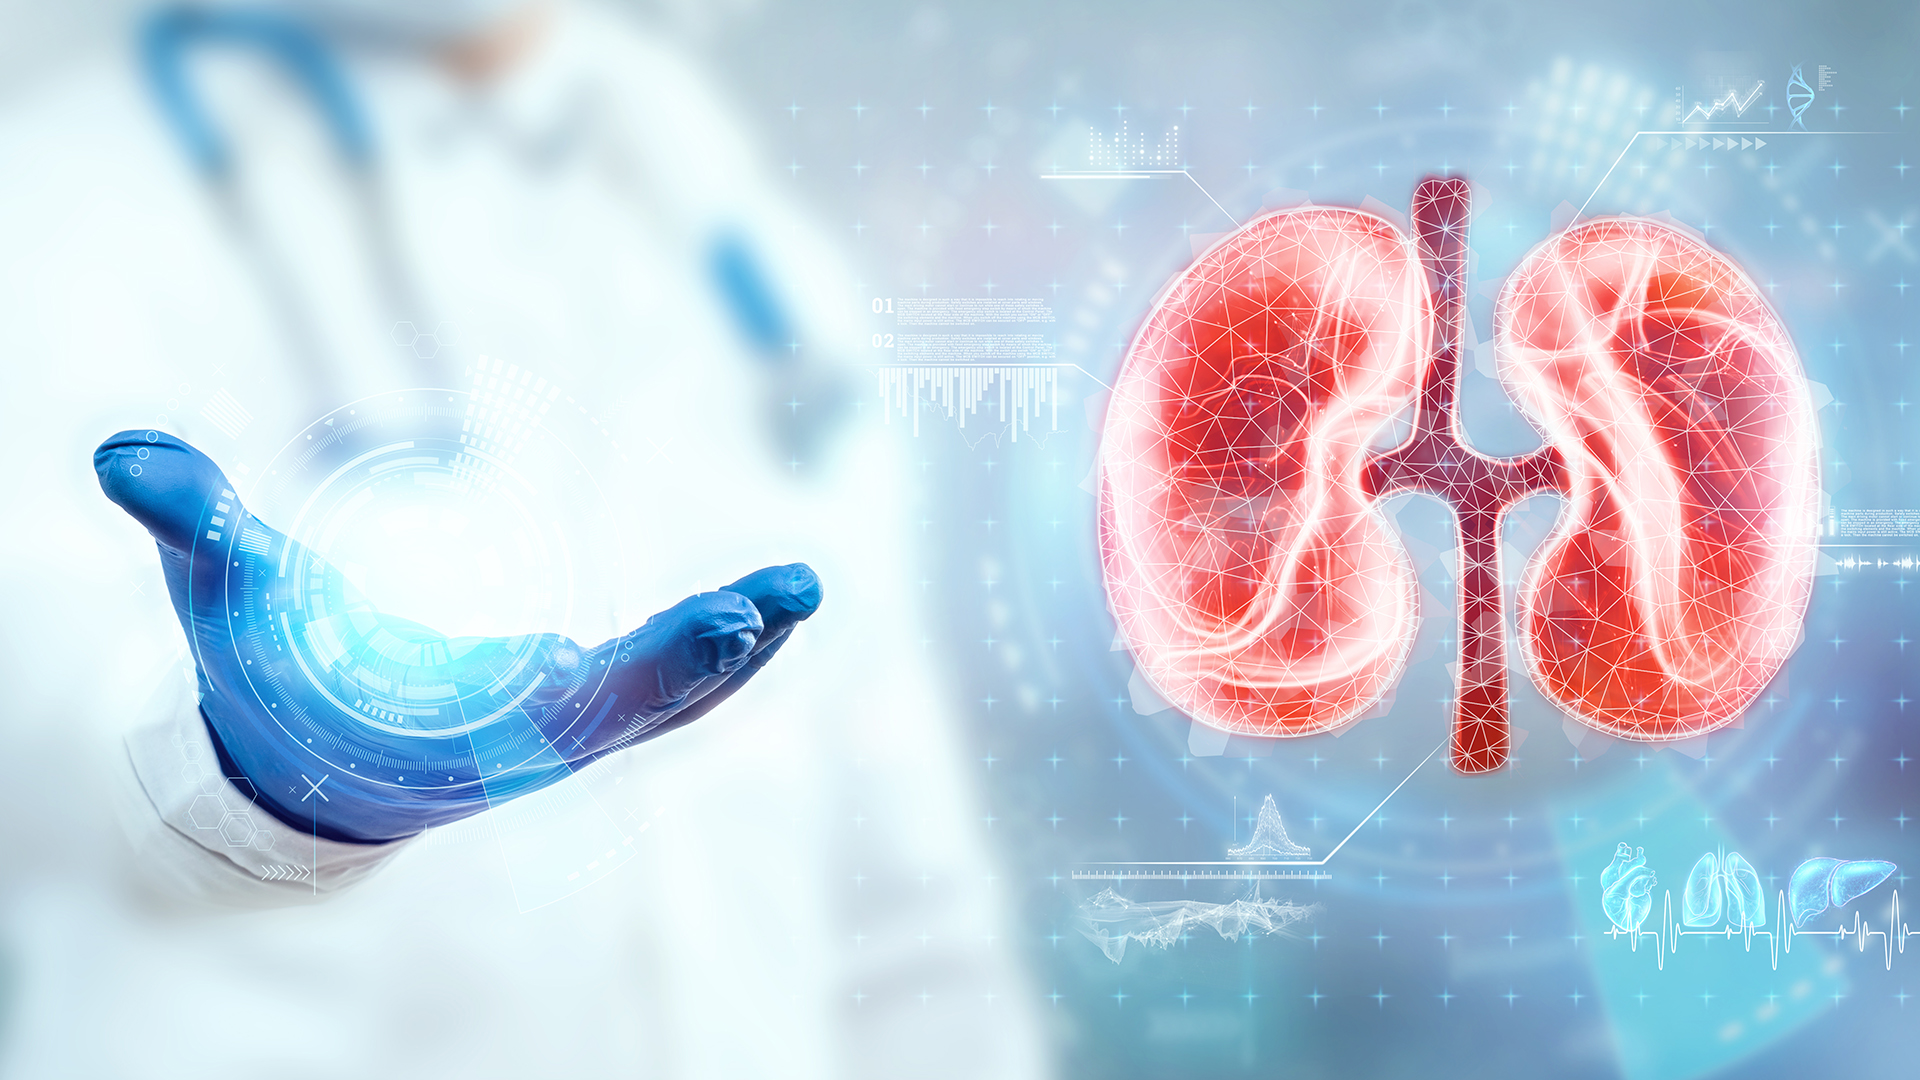 albumin-to-creatinine ratio helps identify early kidney disease